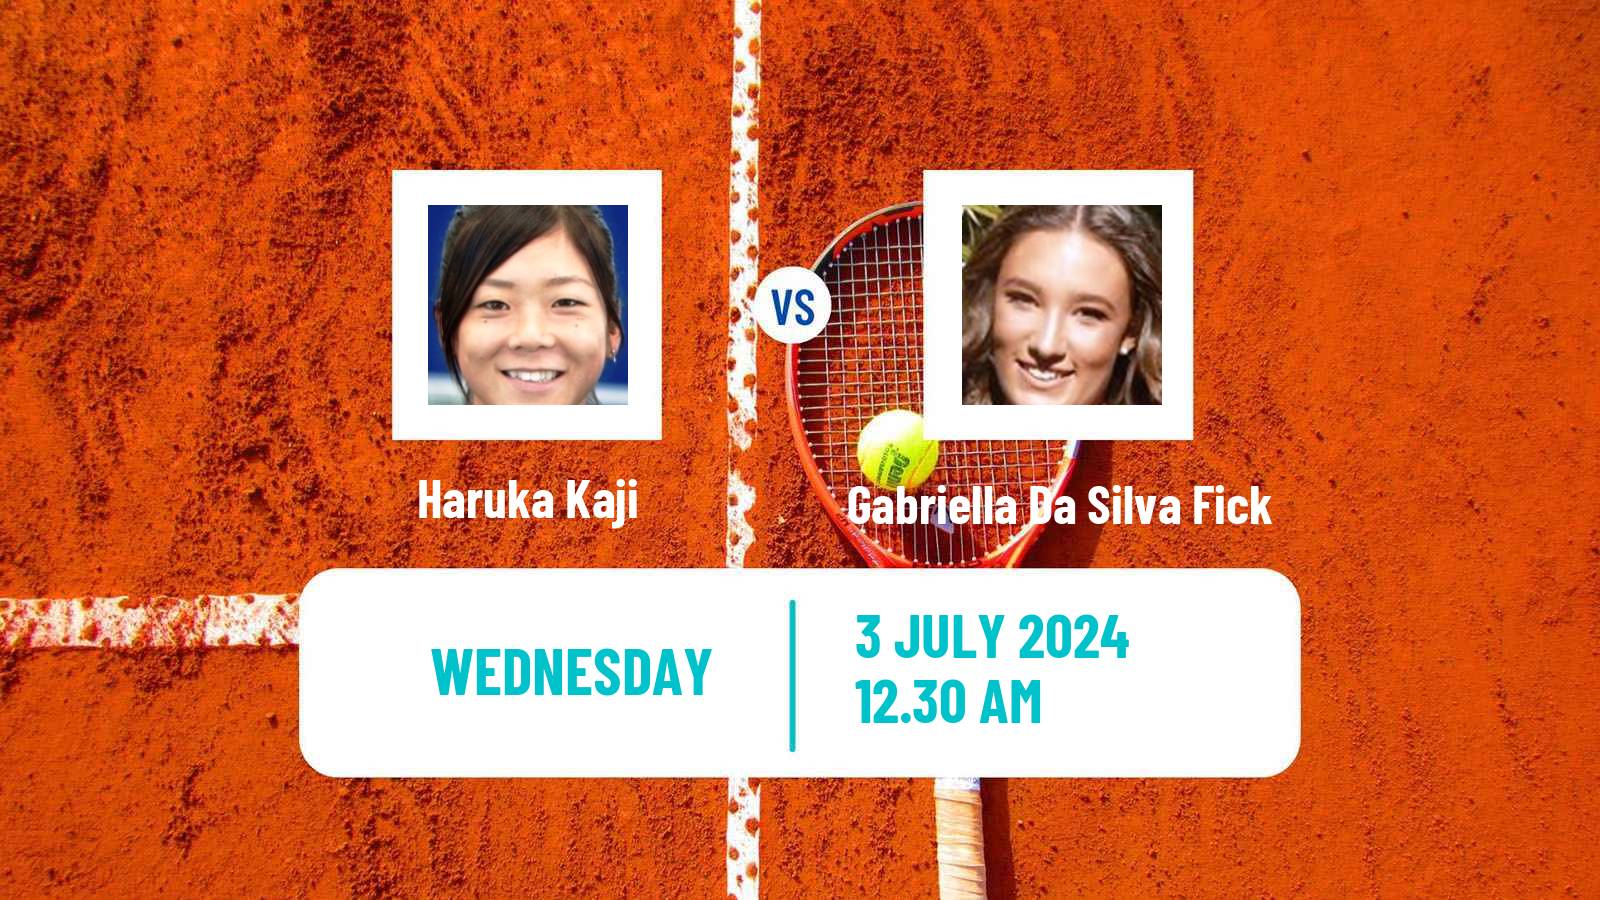 Tennis ITF W35 Hong Kong Women Haruka Kaji - Gabriella Da Silva Fick